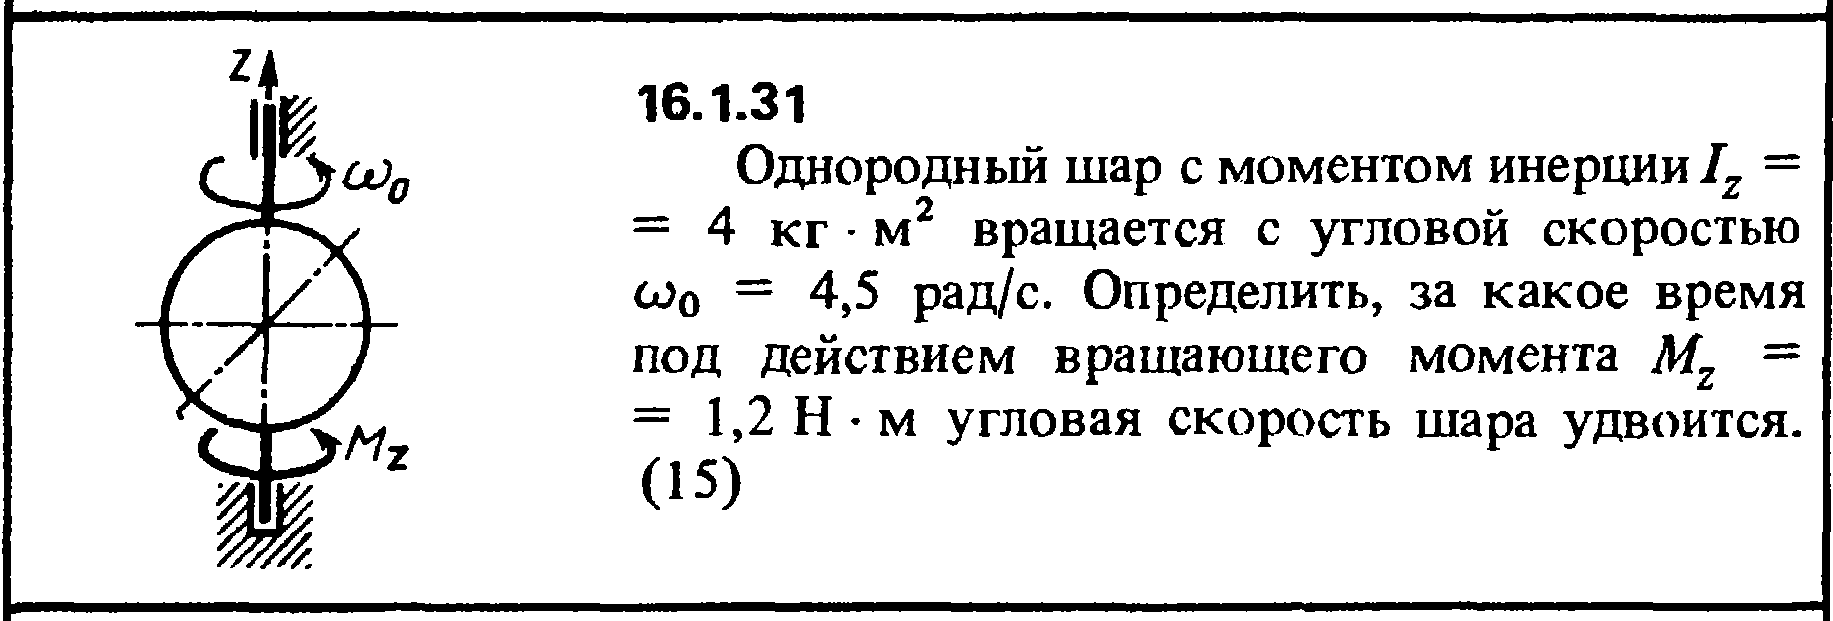 Решение задачи 16.1.31 из сборника Кепе О.Е. 1989 года